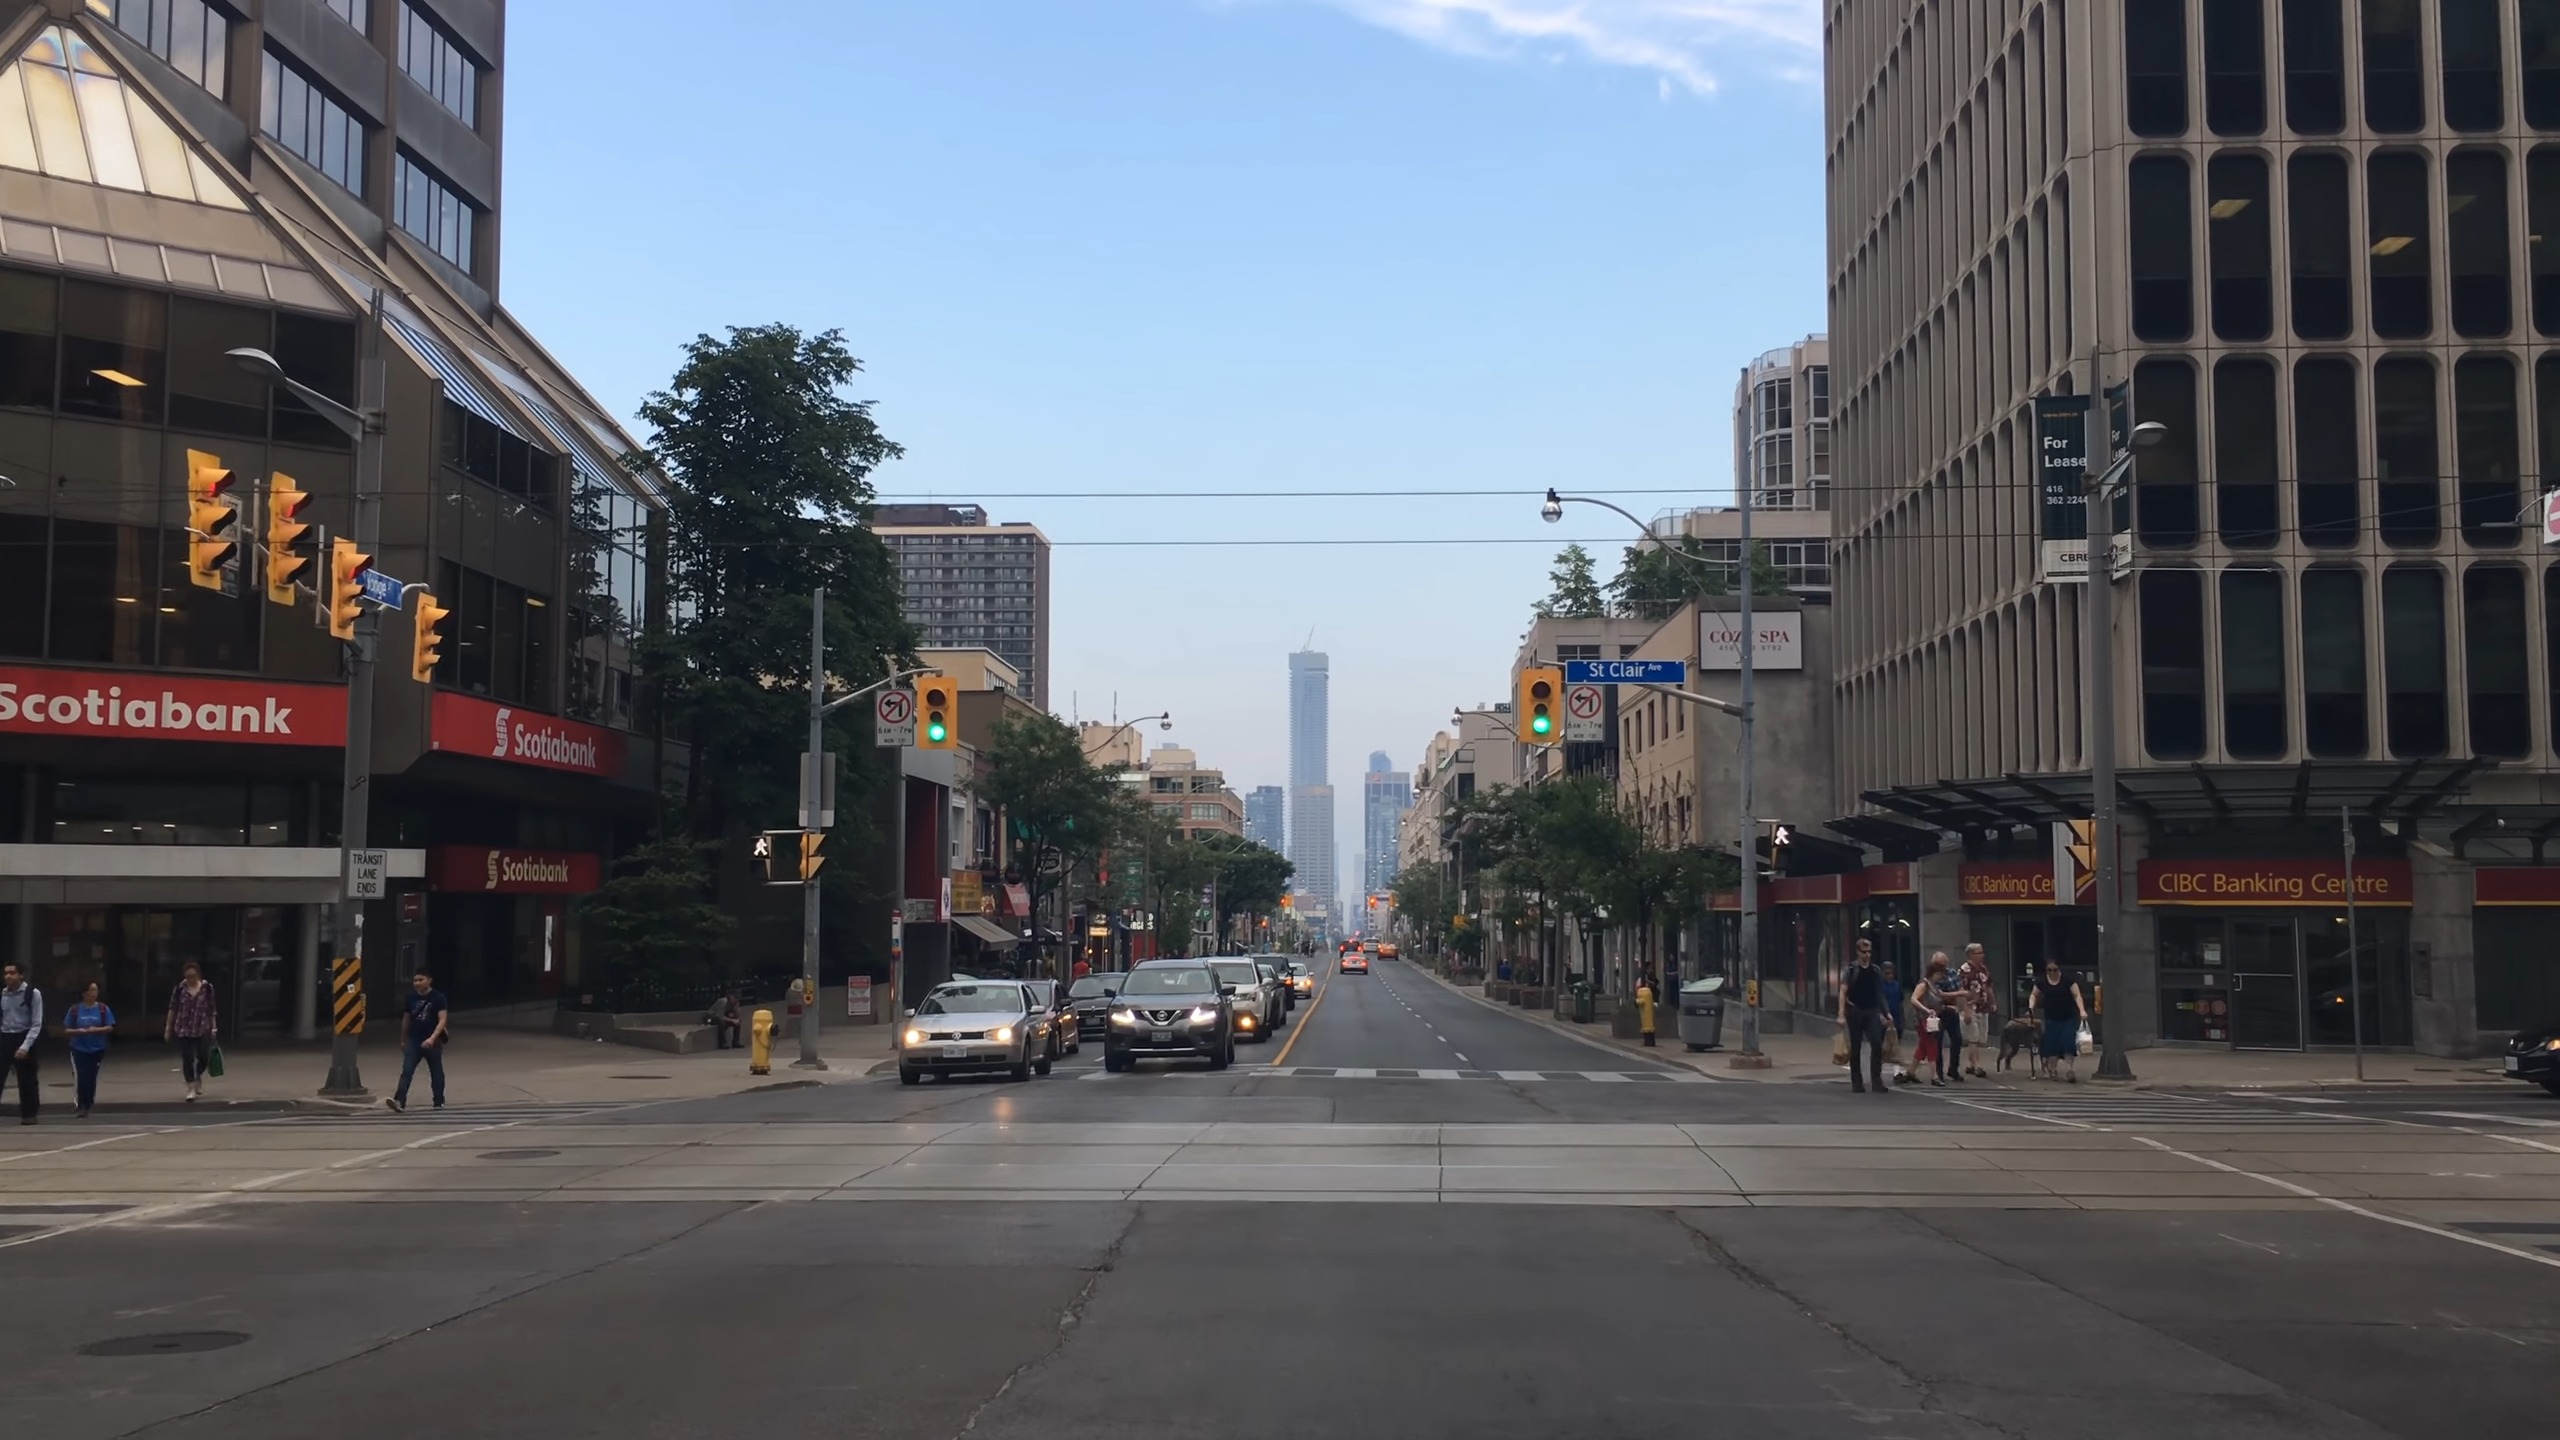 Toronto Traffic